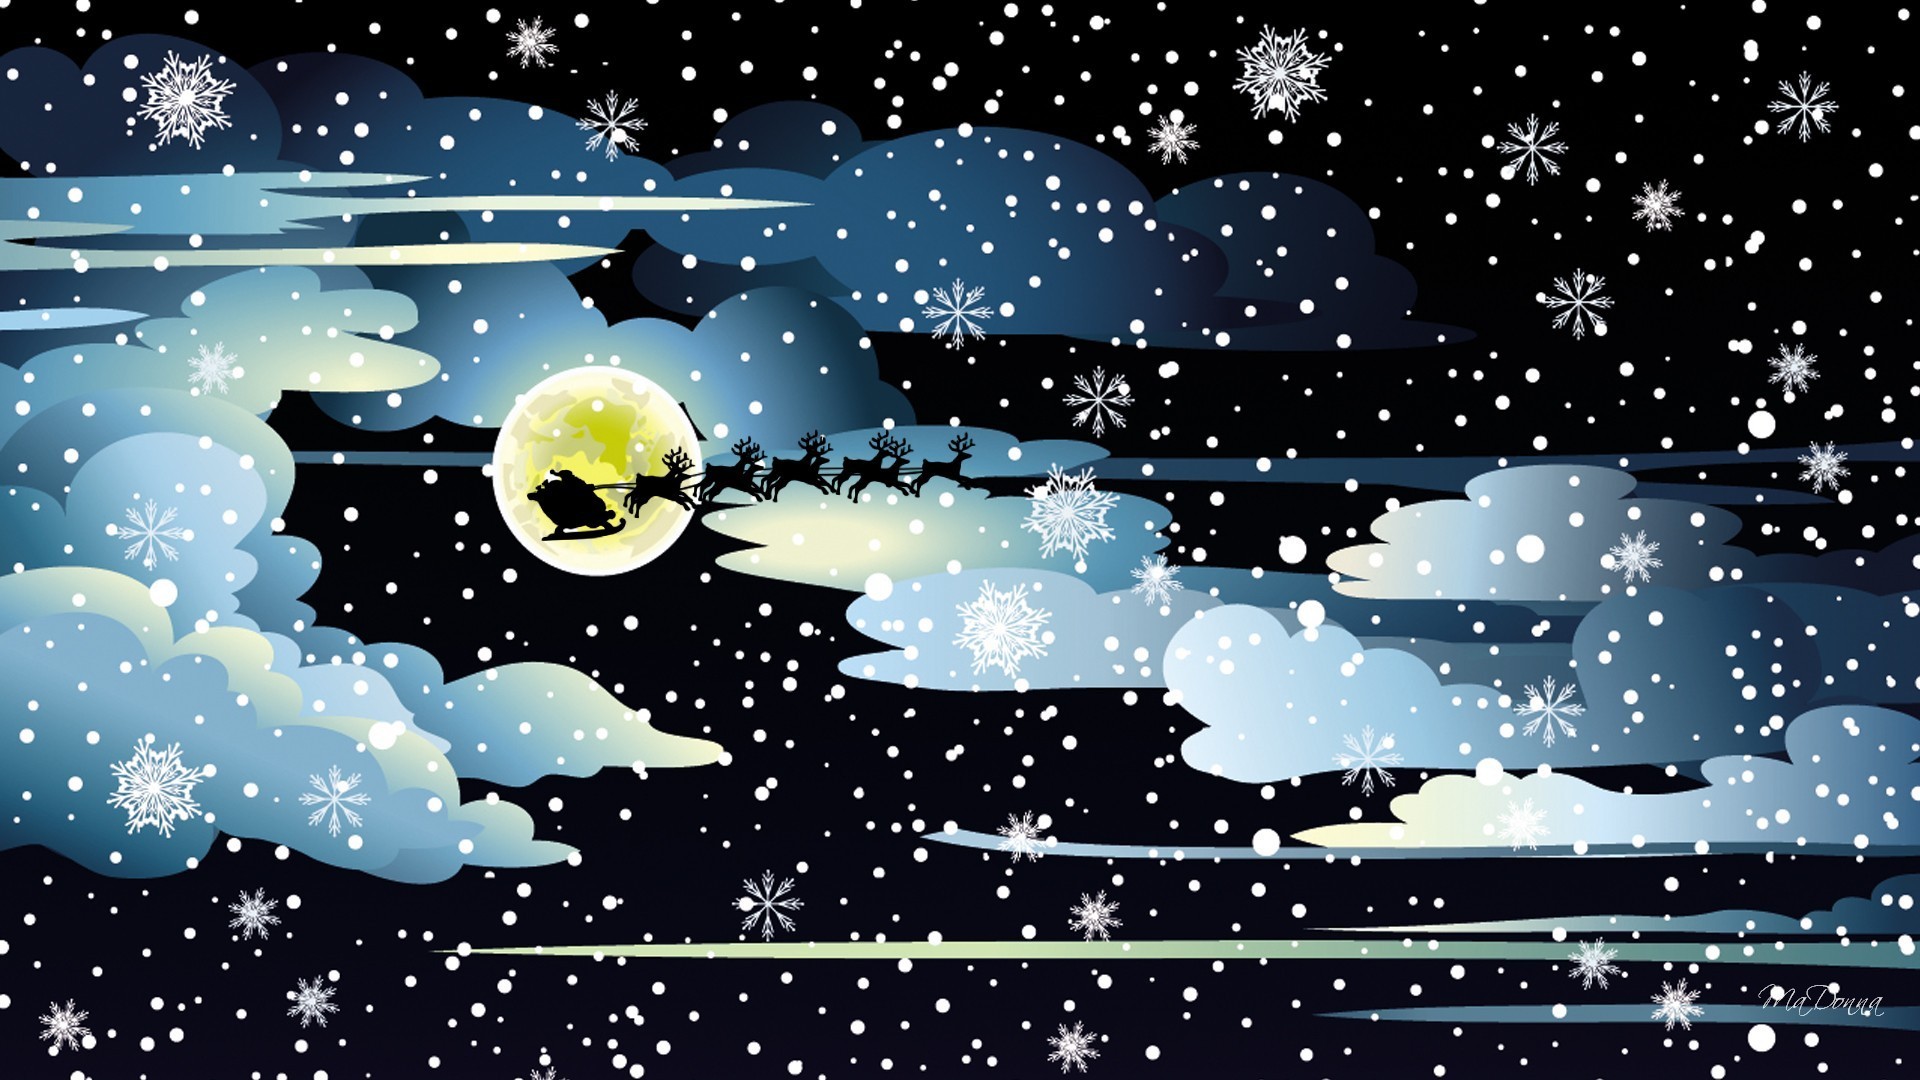 1920x1080 Eve Tag - Clouds Feliz Sky Full Christmas Stars Eve Nick Snowflakes Santa  Sleigh Reindeer Snow